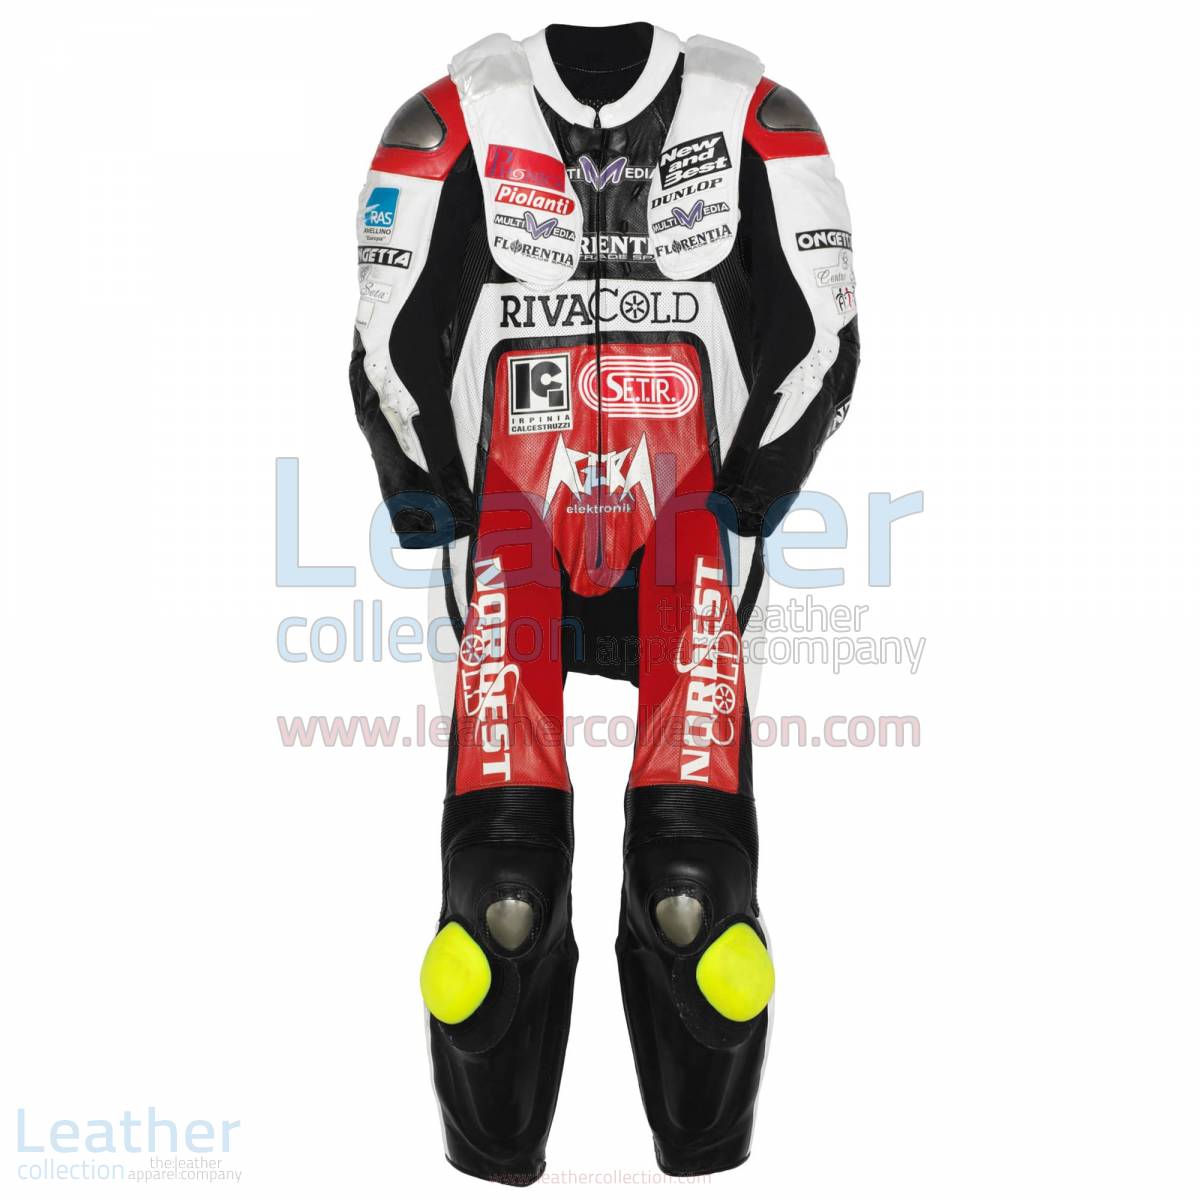 Simone Grotzkyj Giorgi Aprilia GP 2007 Leathers – Aprilia Suit